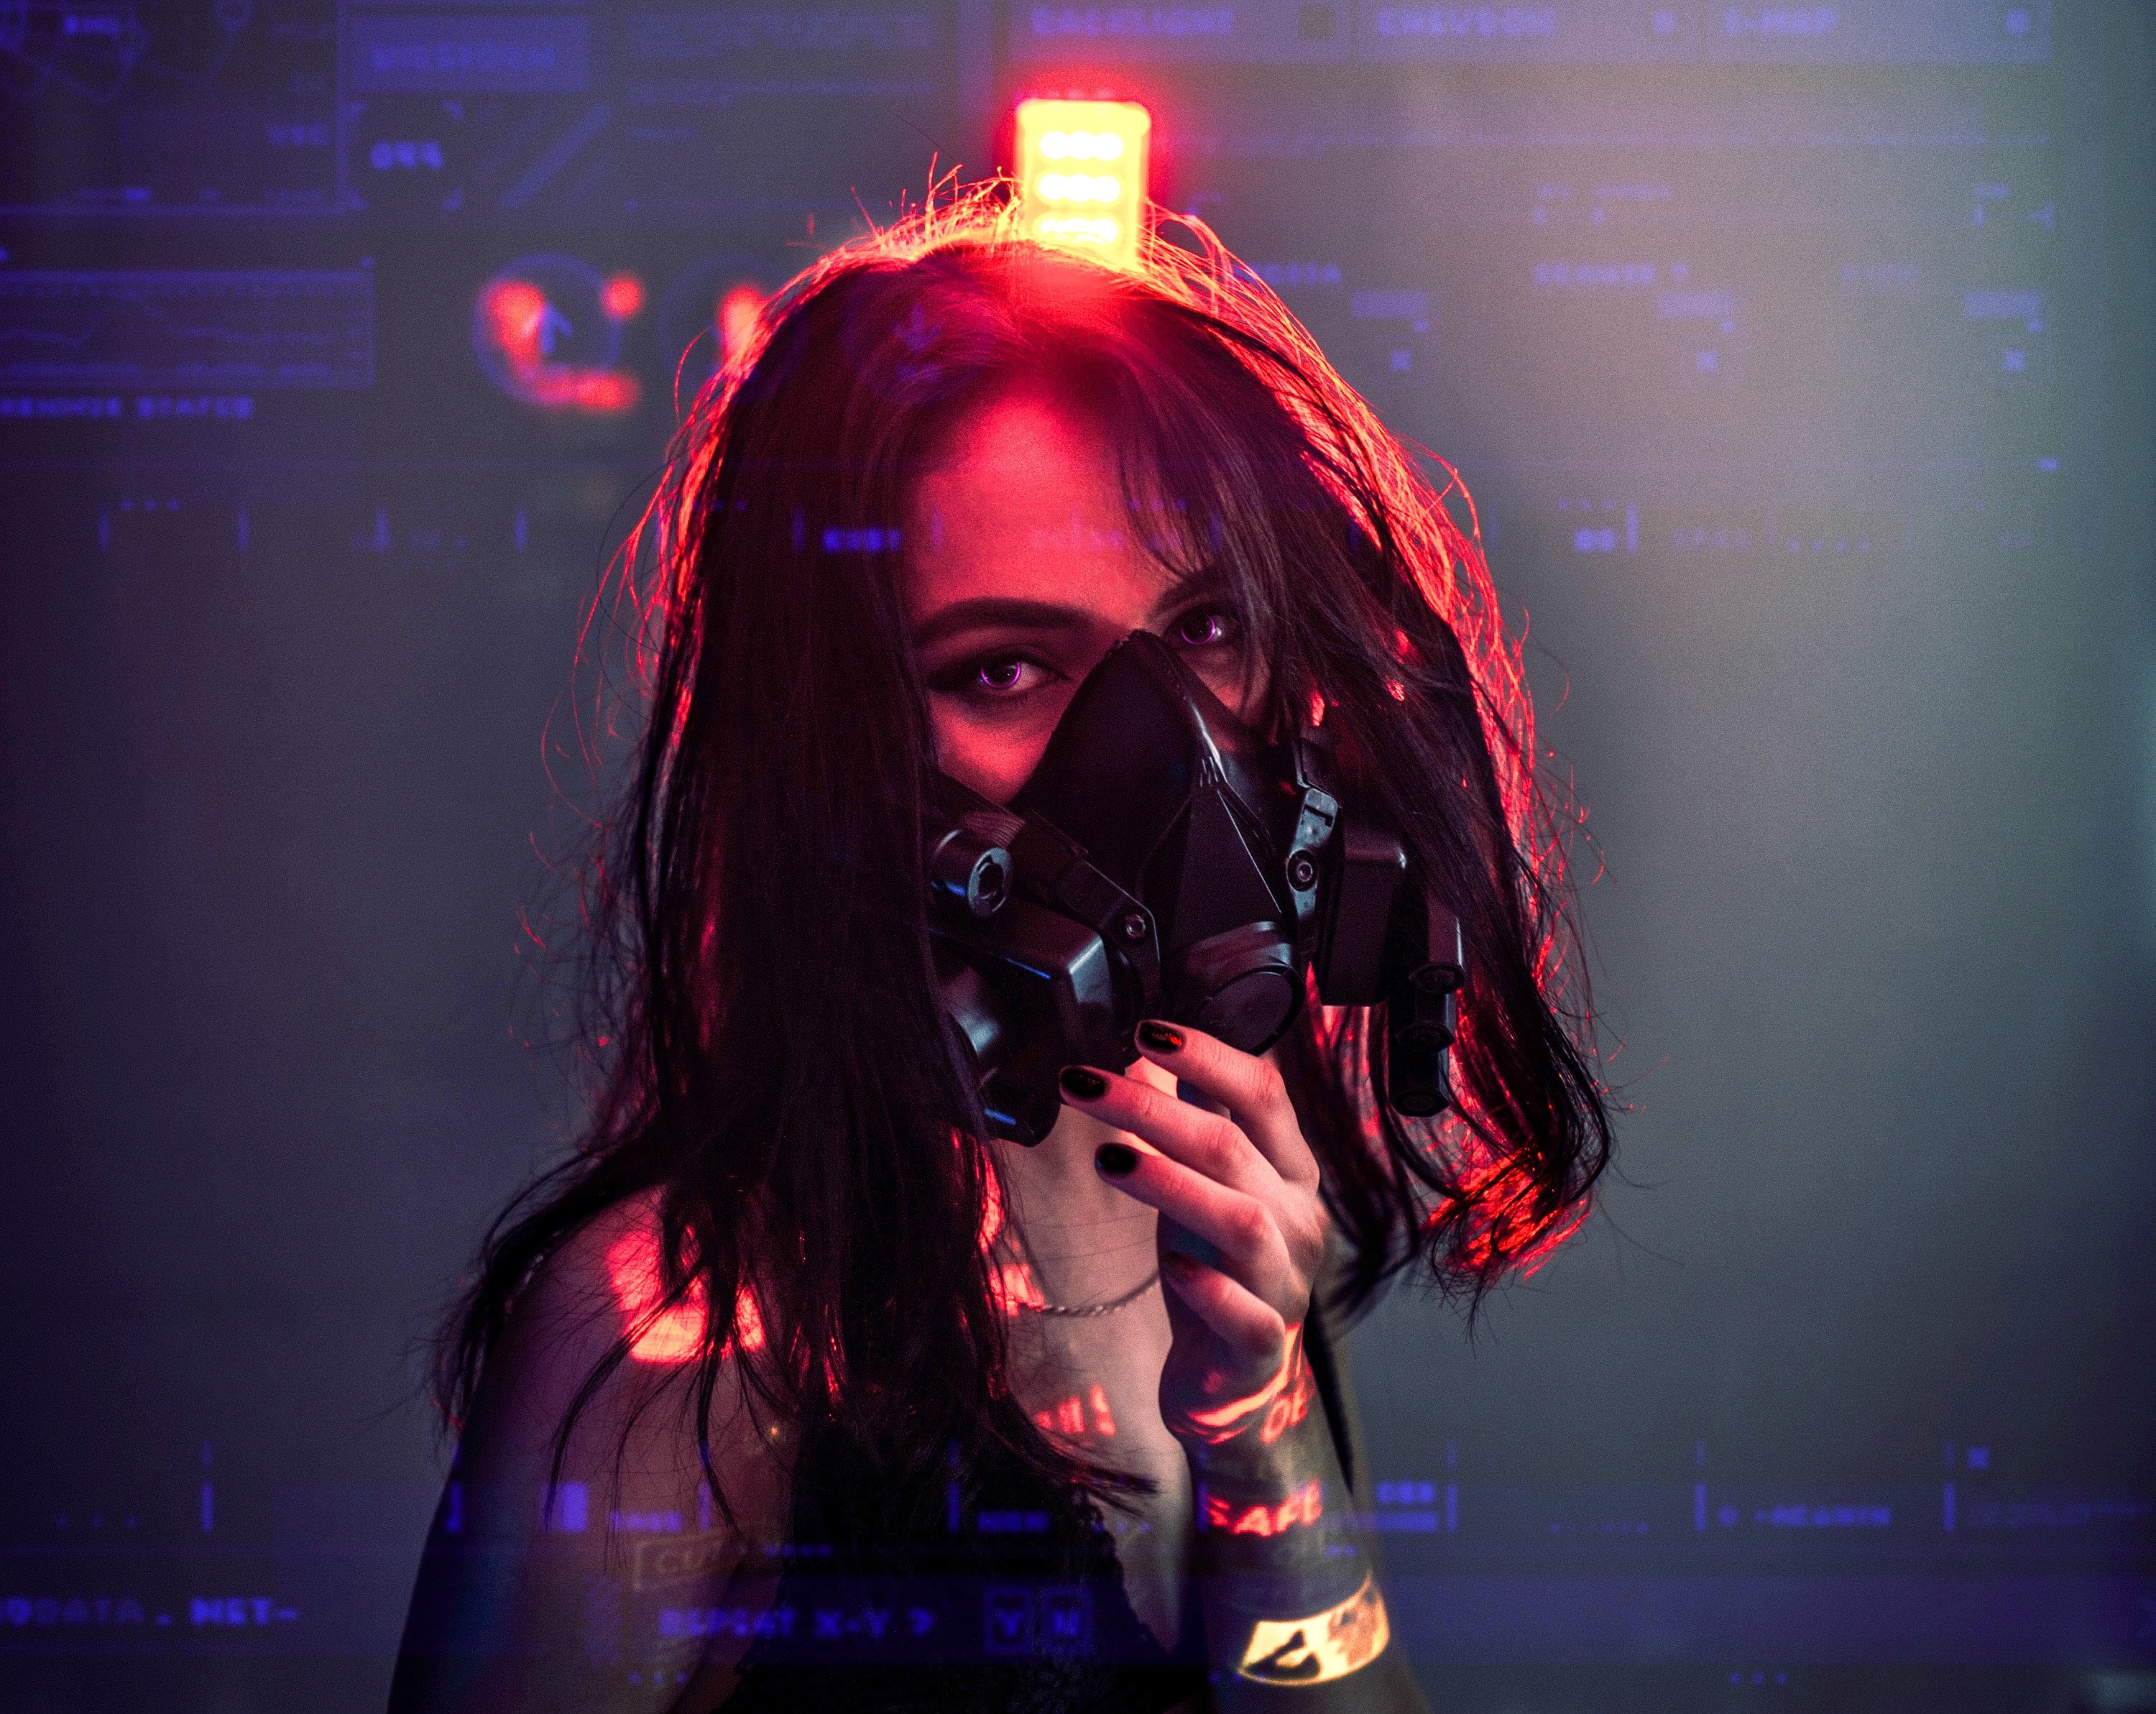 Sci Fi Cyberpunk Girl With Gas Mask High Definition Wallpaper 9527